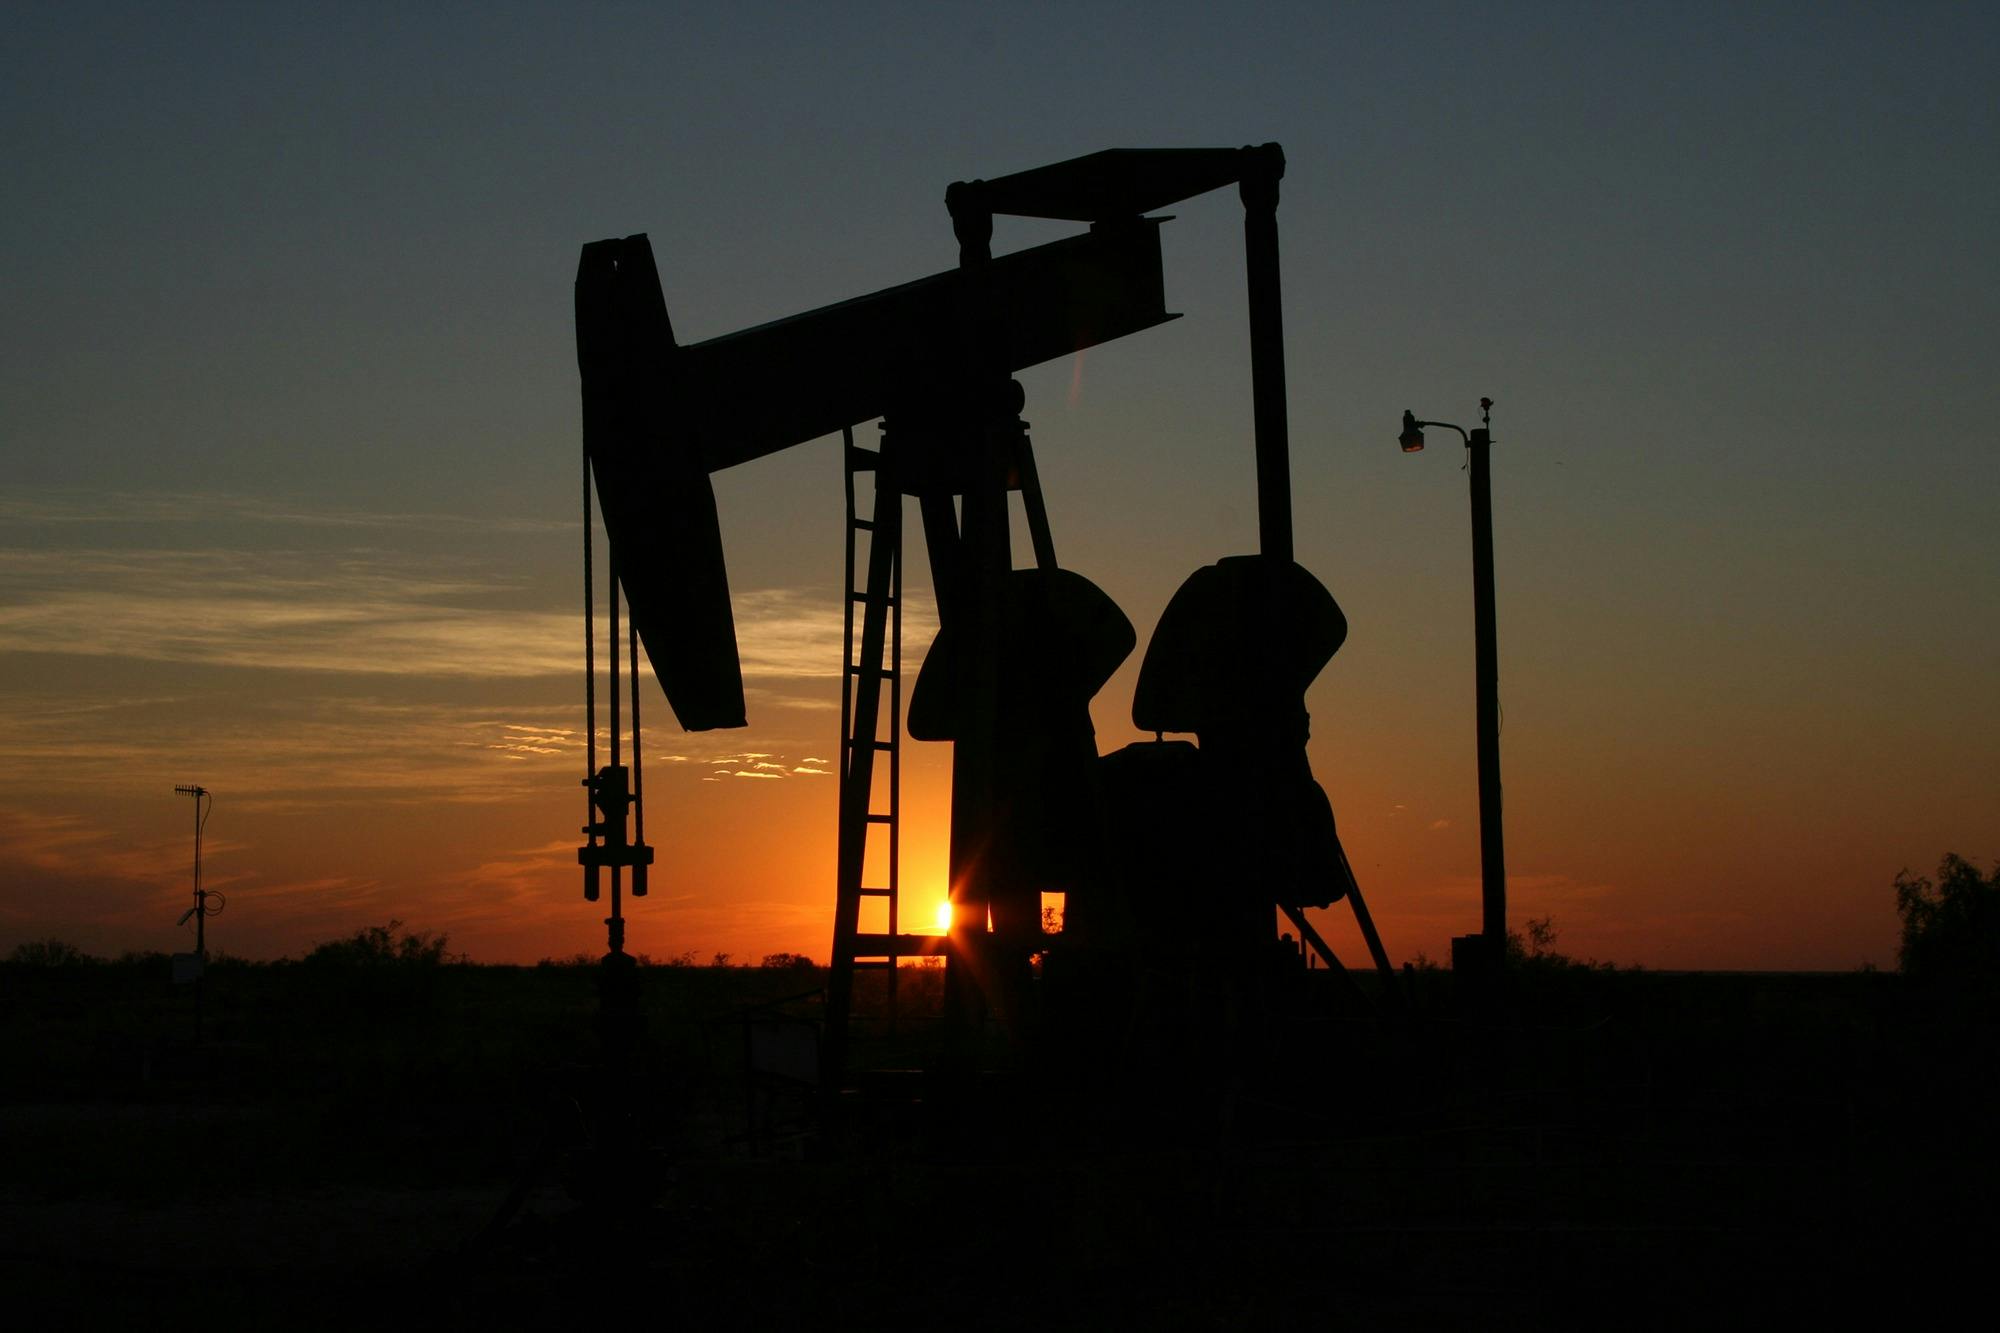 oil monahans texas sunset 70362.jpeg?cs=srgb&dl=dawn drill evening 70362